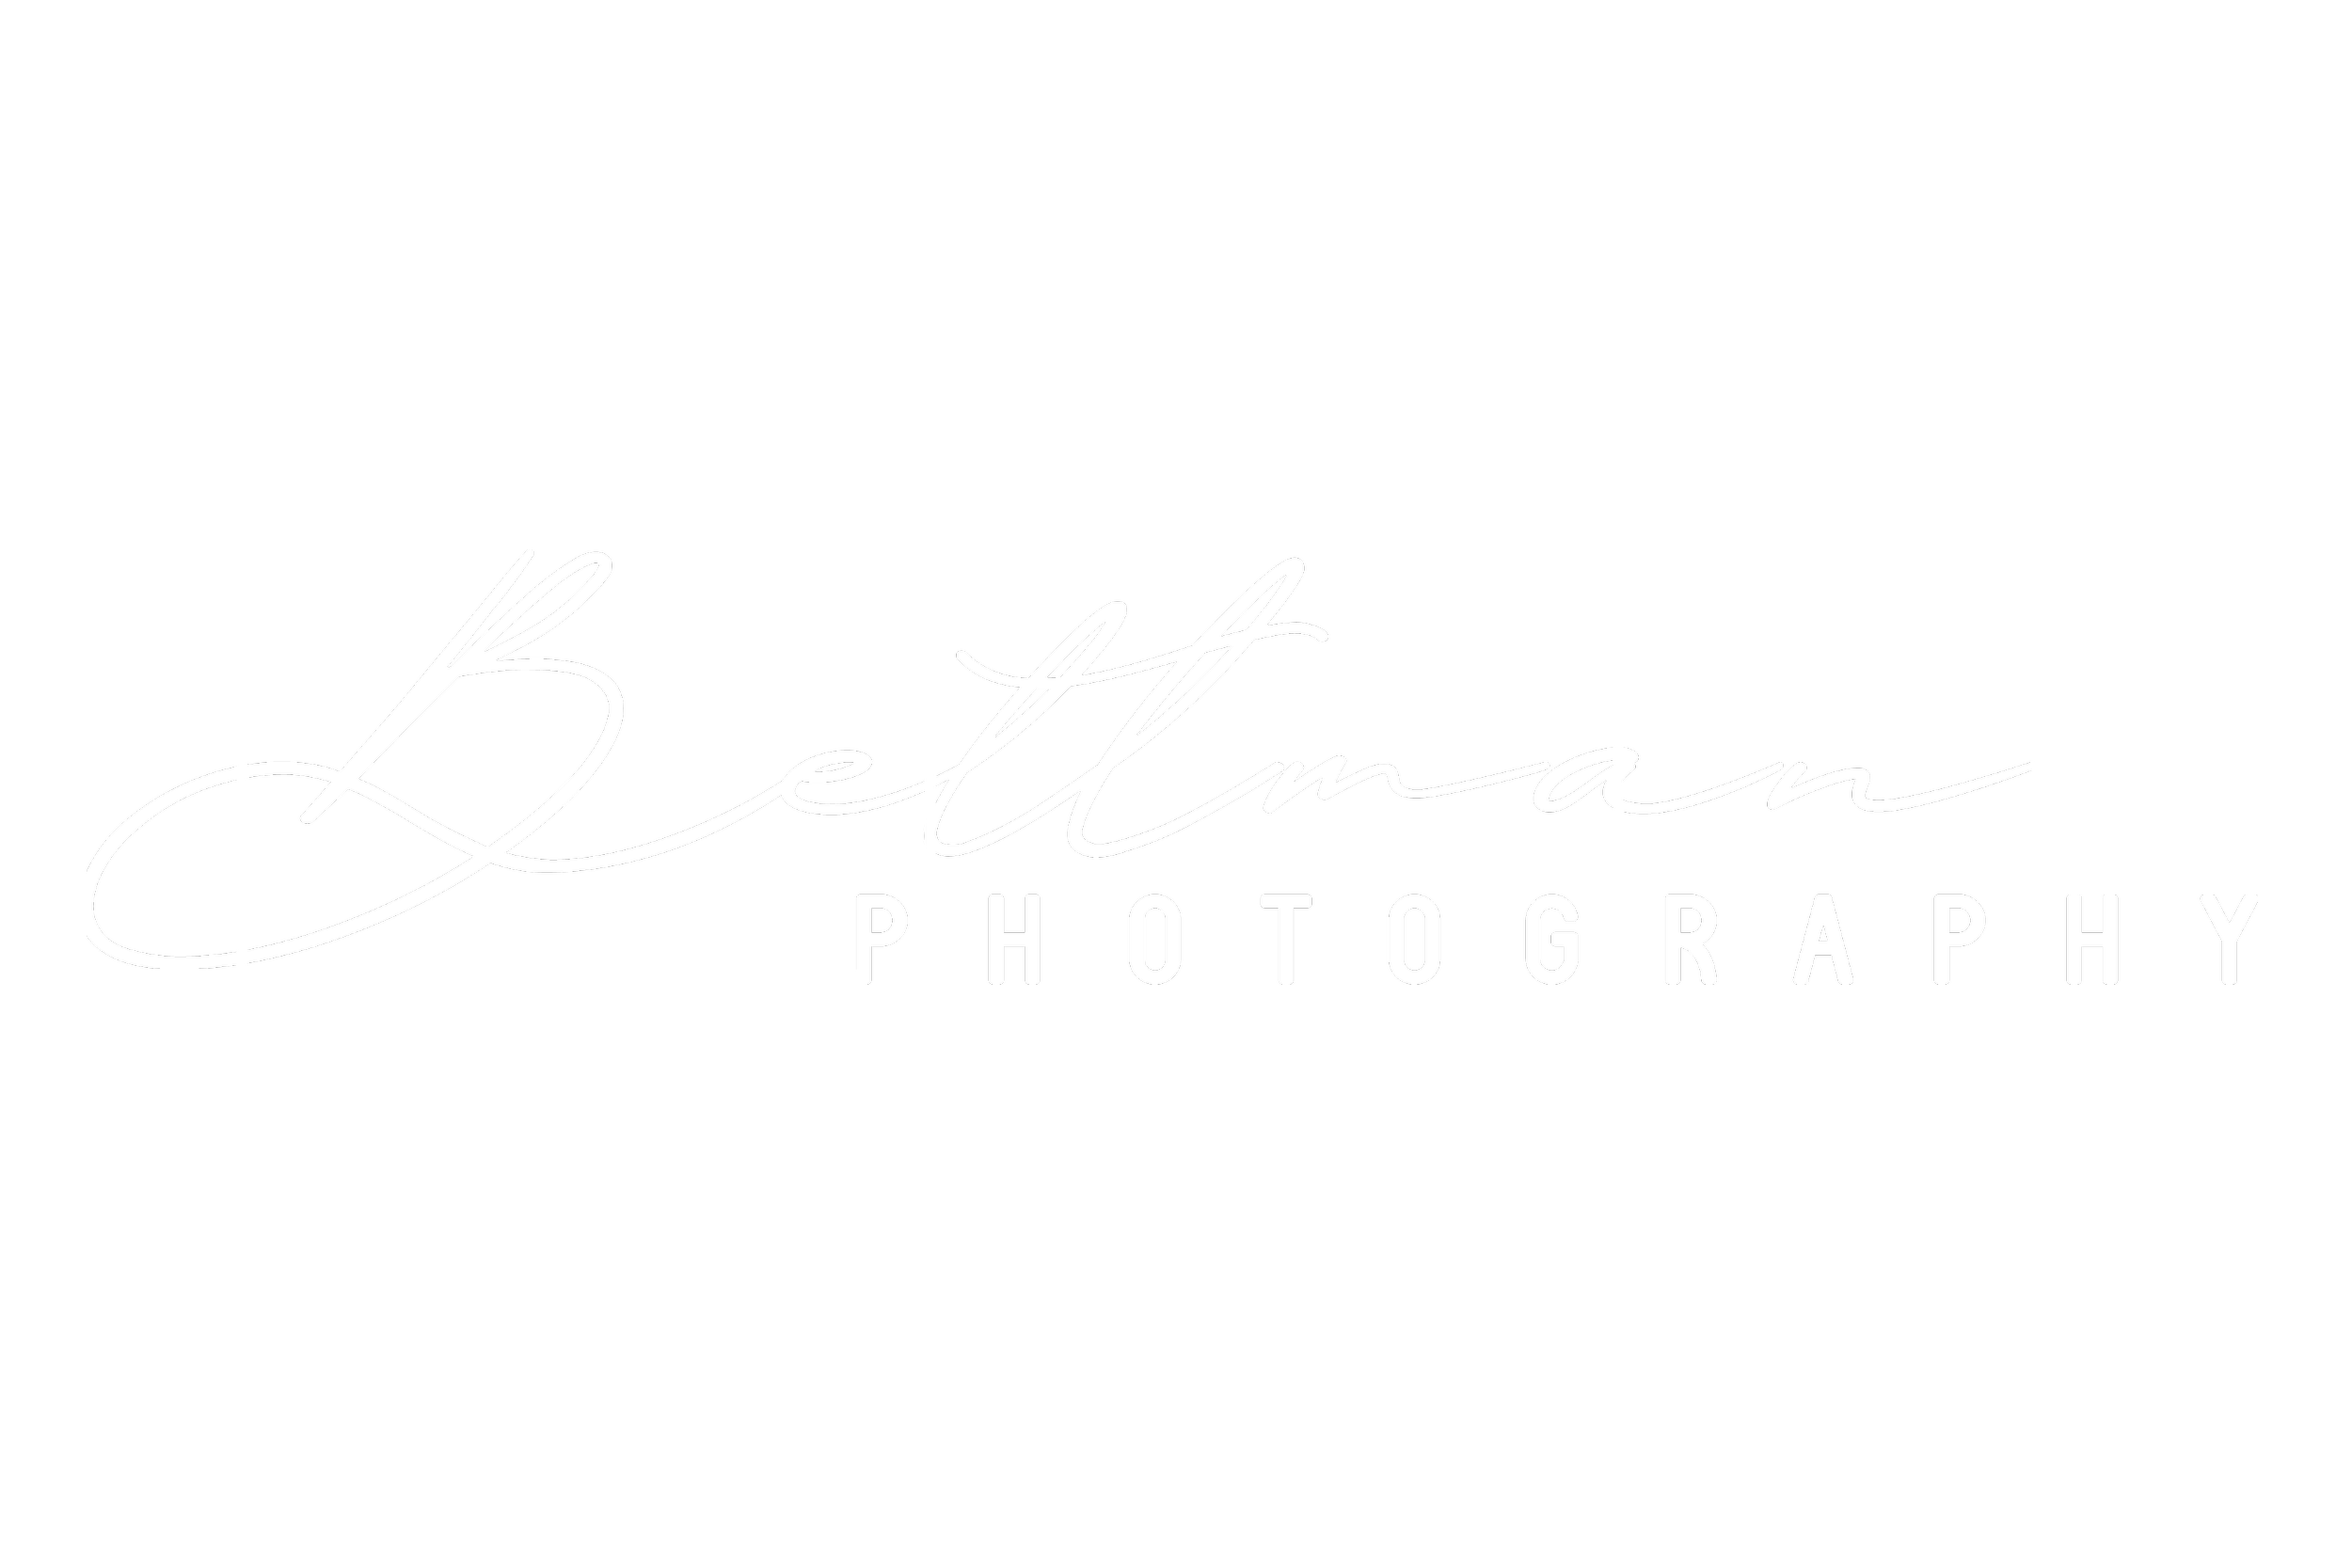 Bettman Photography